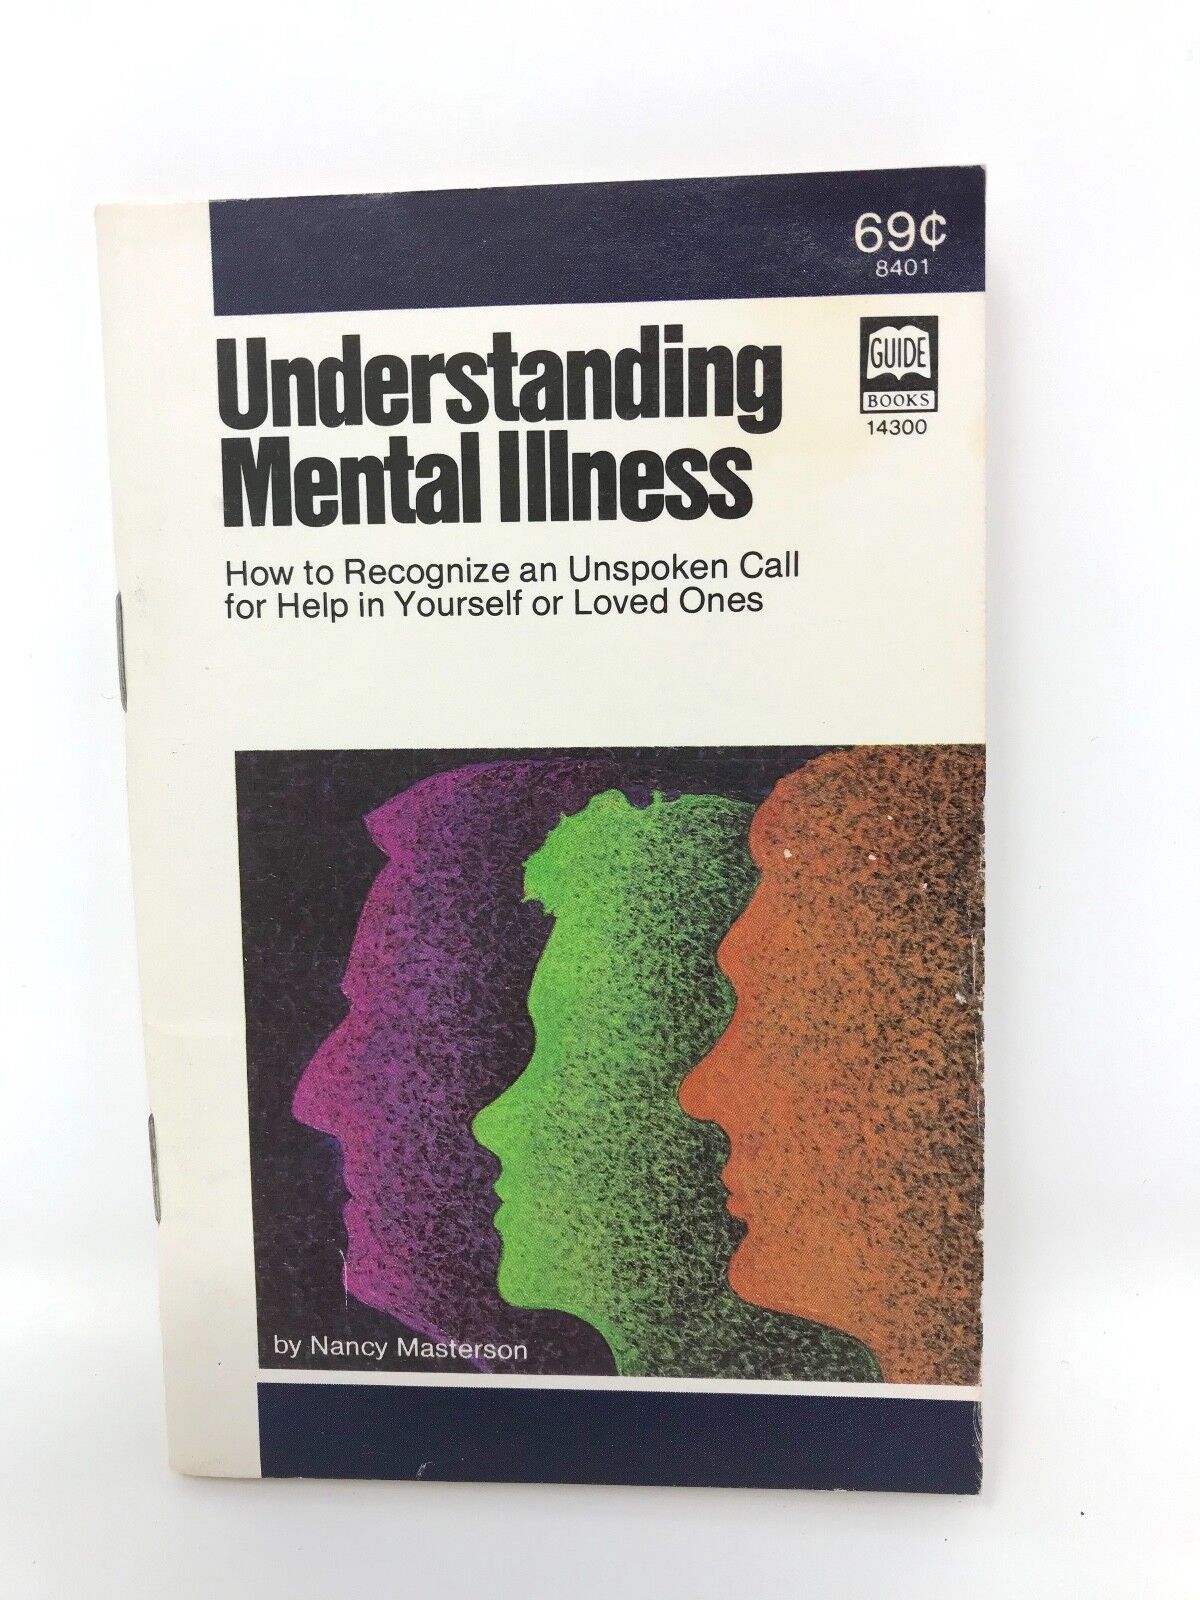 Vintage Guide Books - Understanding Mental Illness health #8401 help 1983